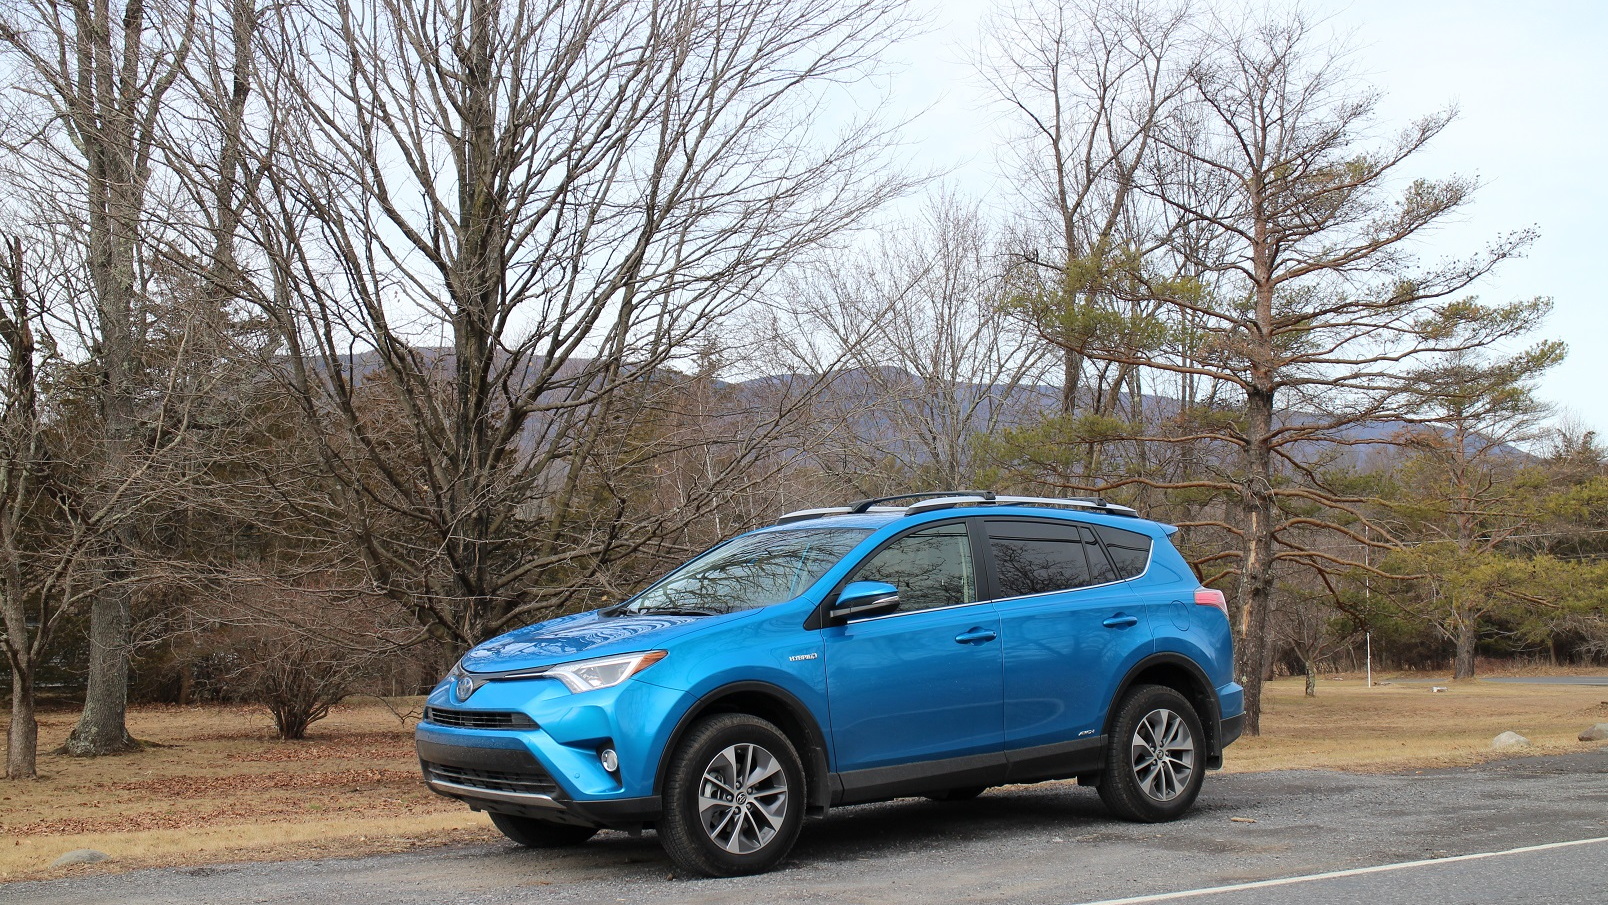 2016 Toyota RAV4 Hybrid, Catskill Mountains, NY, Feb 2016